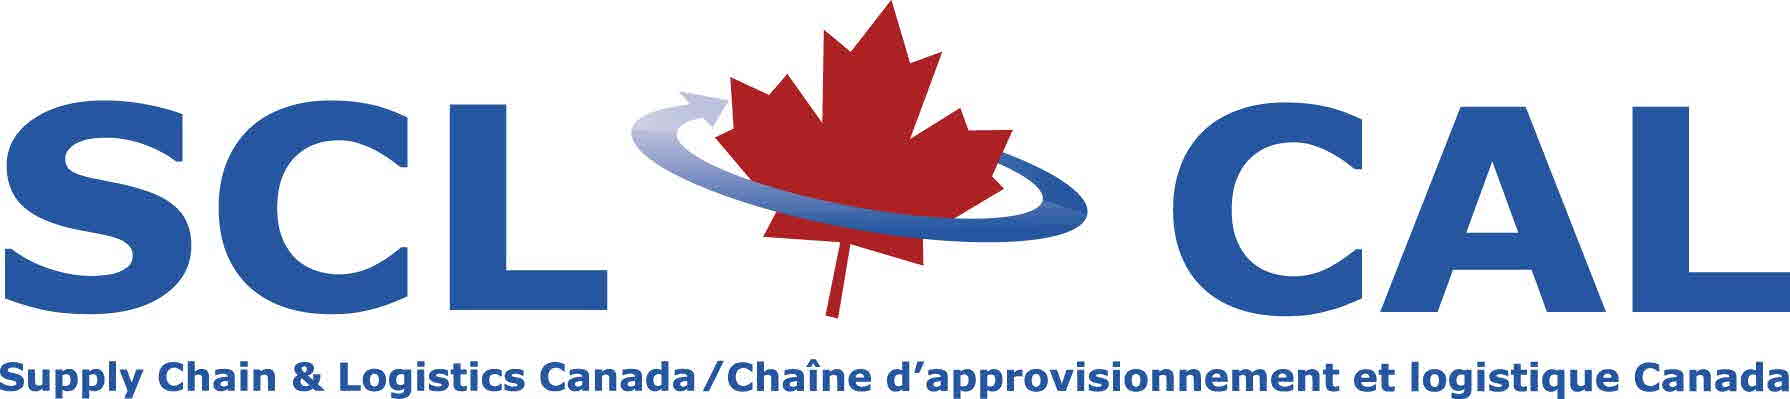 Supply Chain & Logistics Canada / CAL